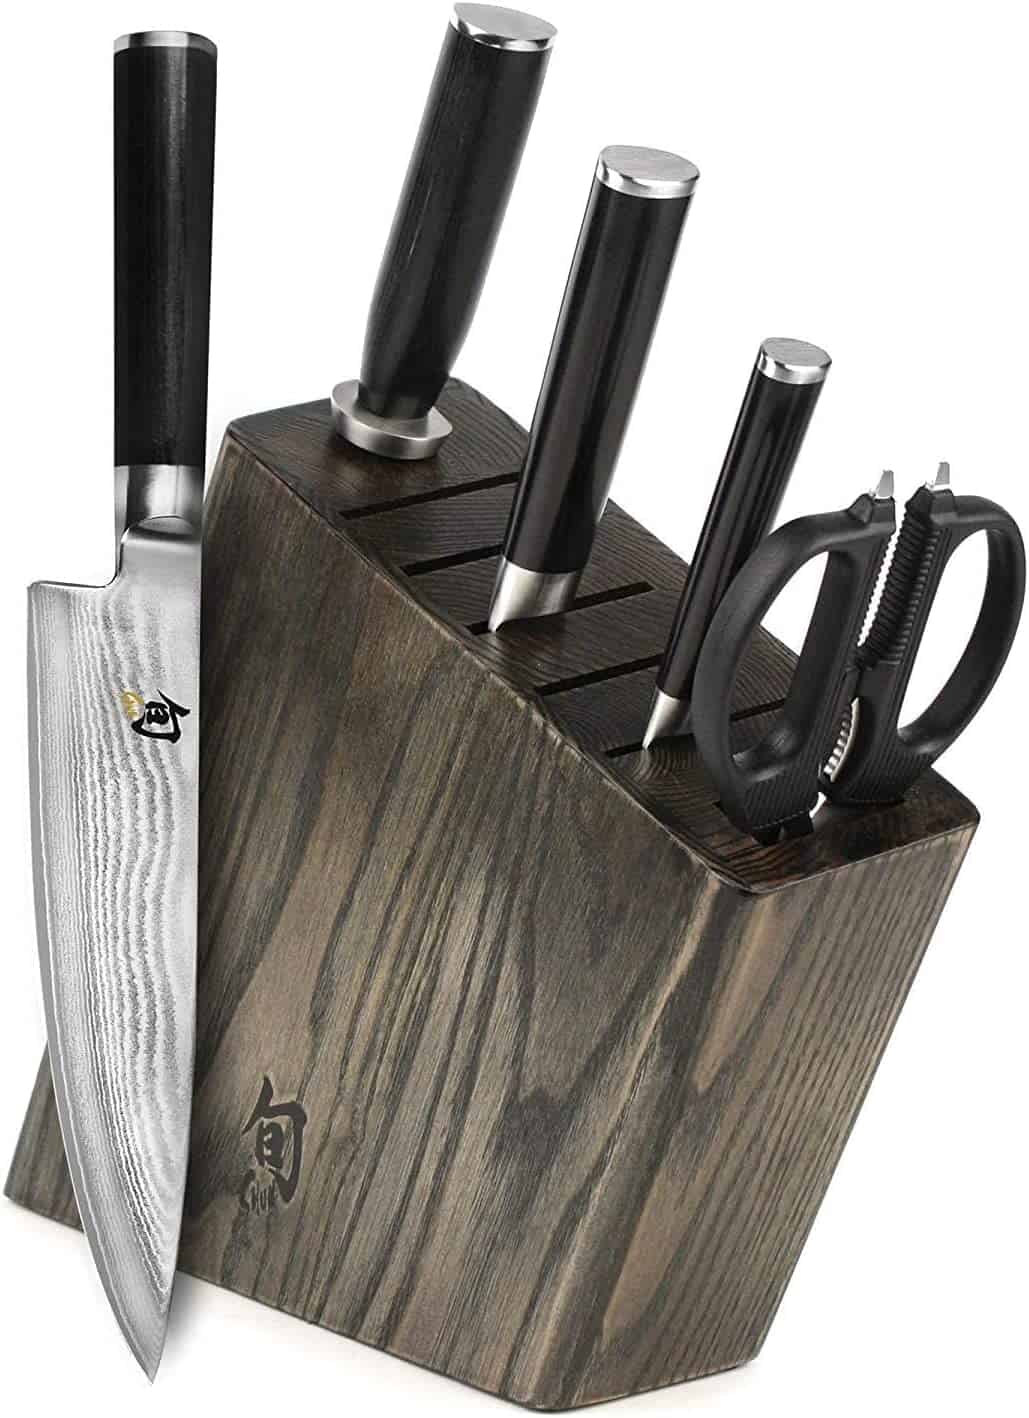 Shun 6-piece slim knife block set review